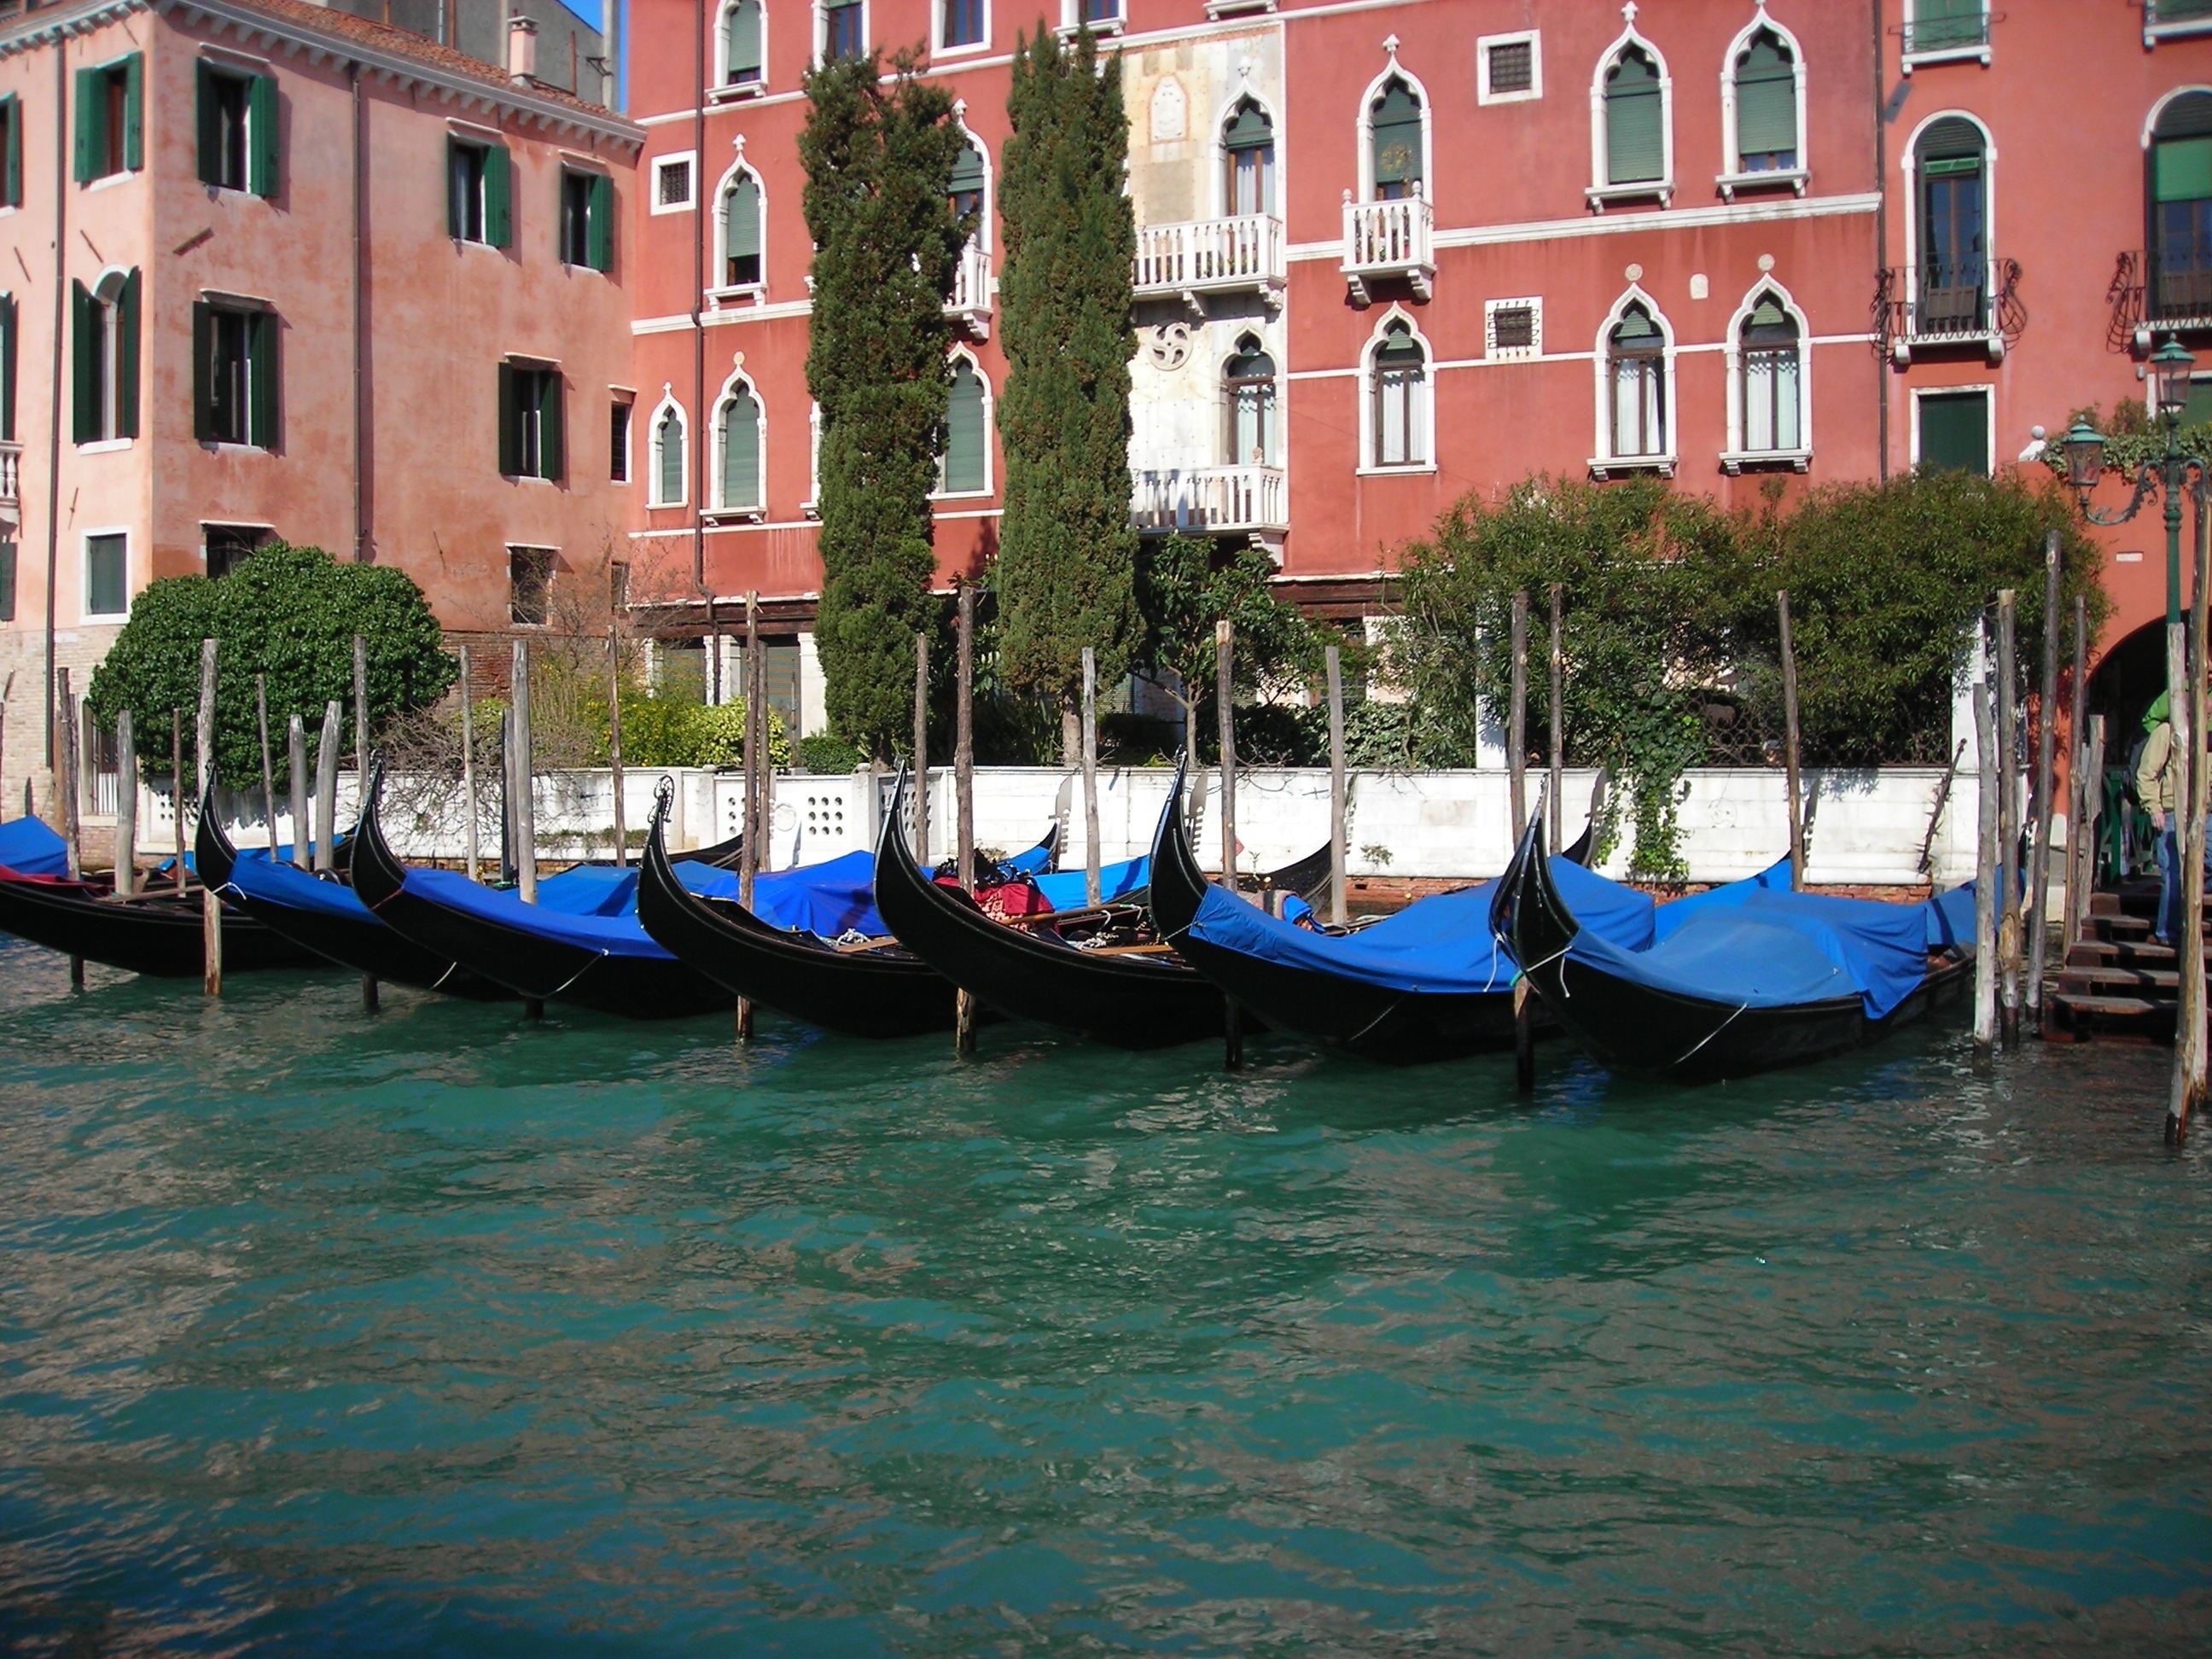 HD wallpaper, Desktop Hd Gondola Background Photo, Gondola Traditional Boat, Venice Channel, Italian Canal, 2600X1950 Hd Desktop, Cultural Experience